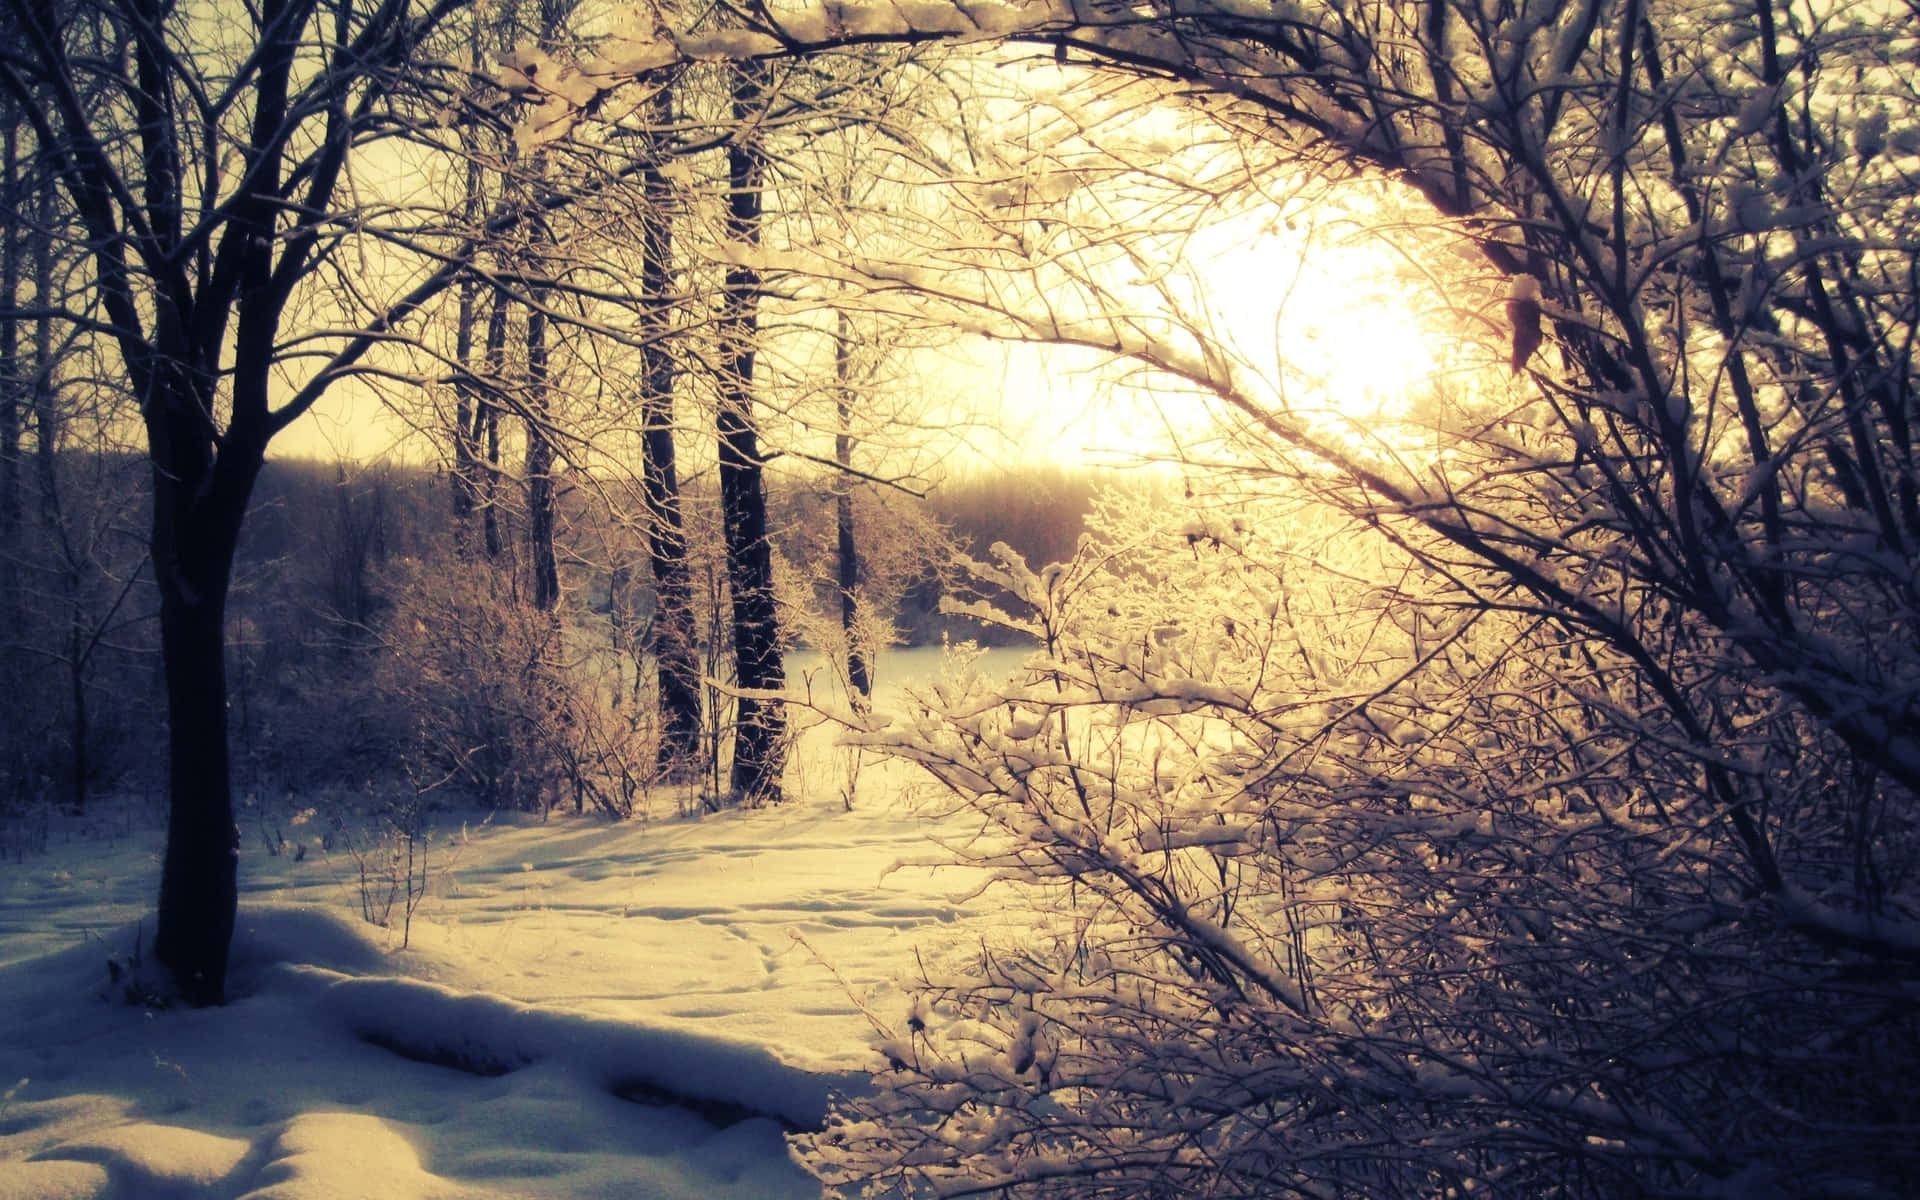 A serene winter forest scene